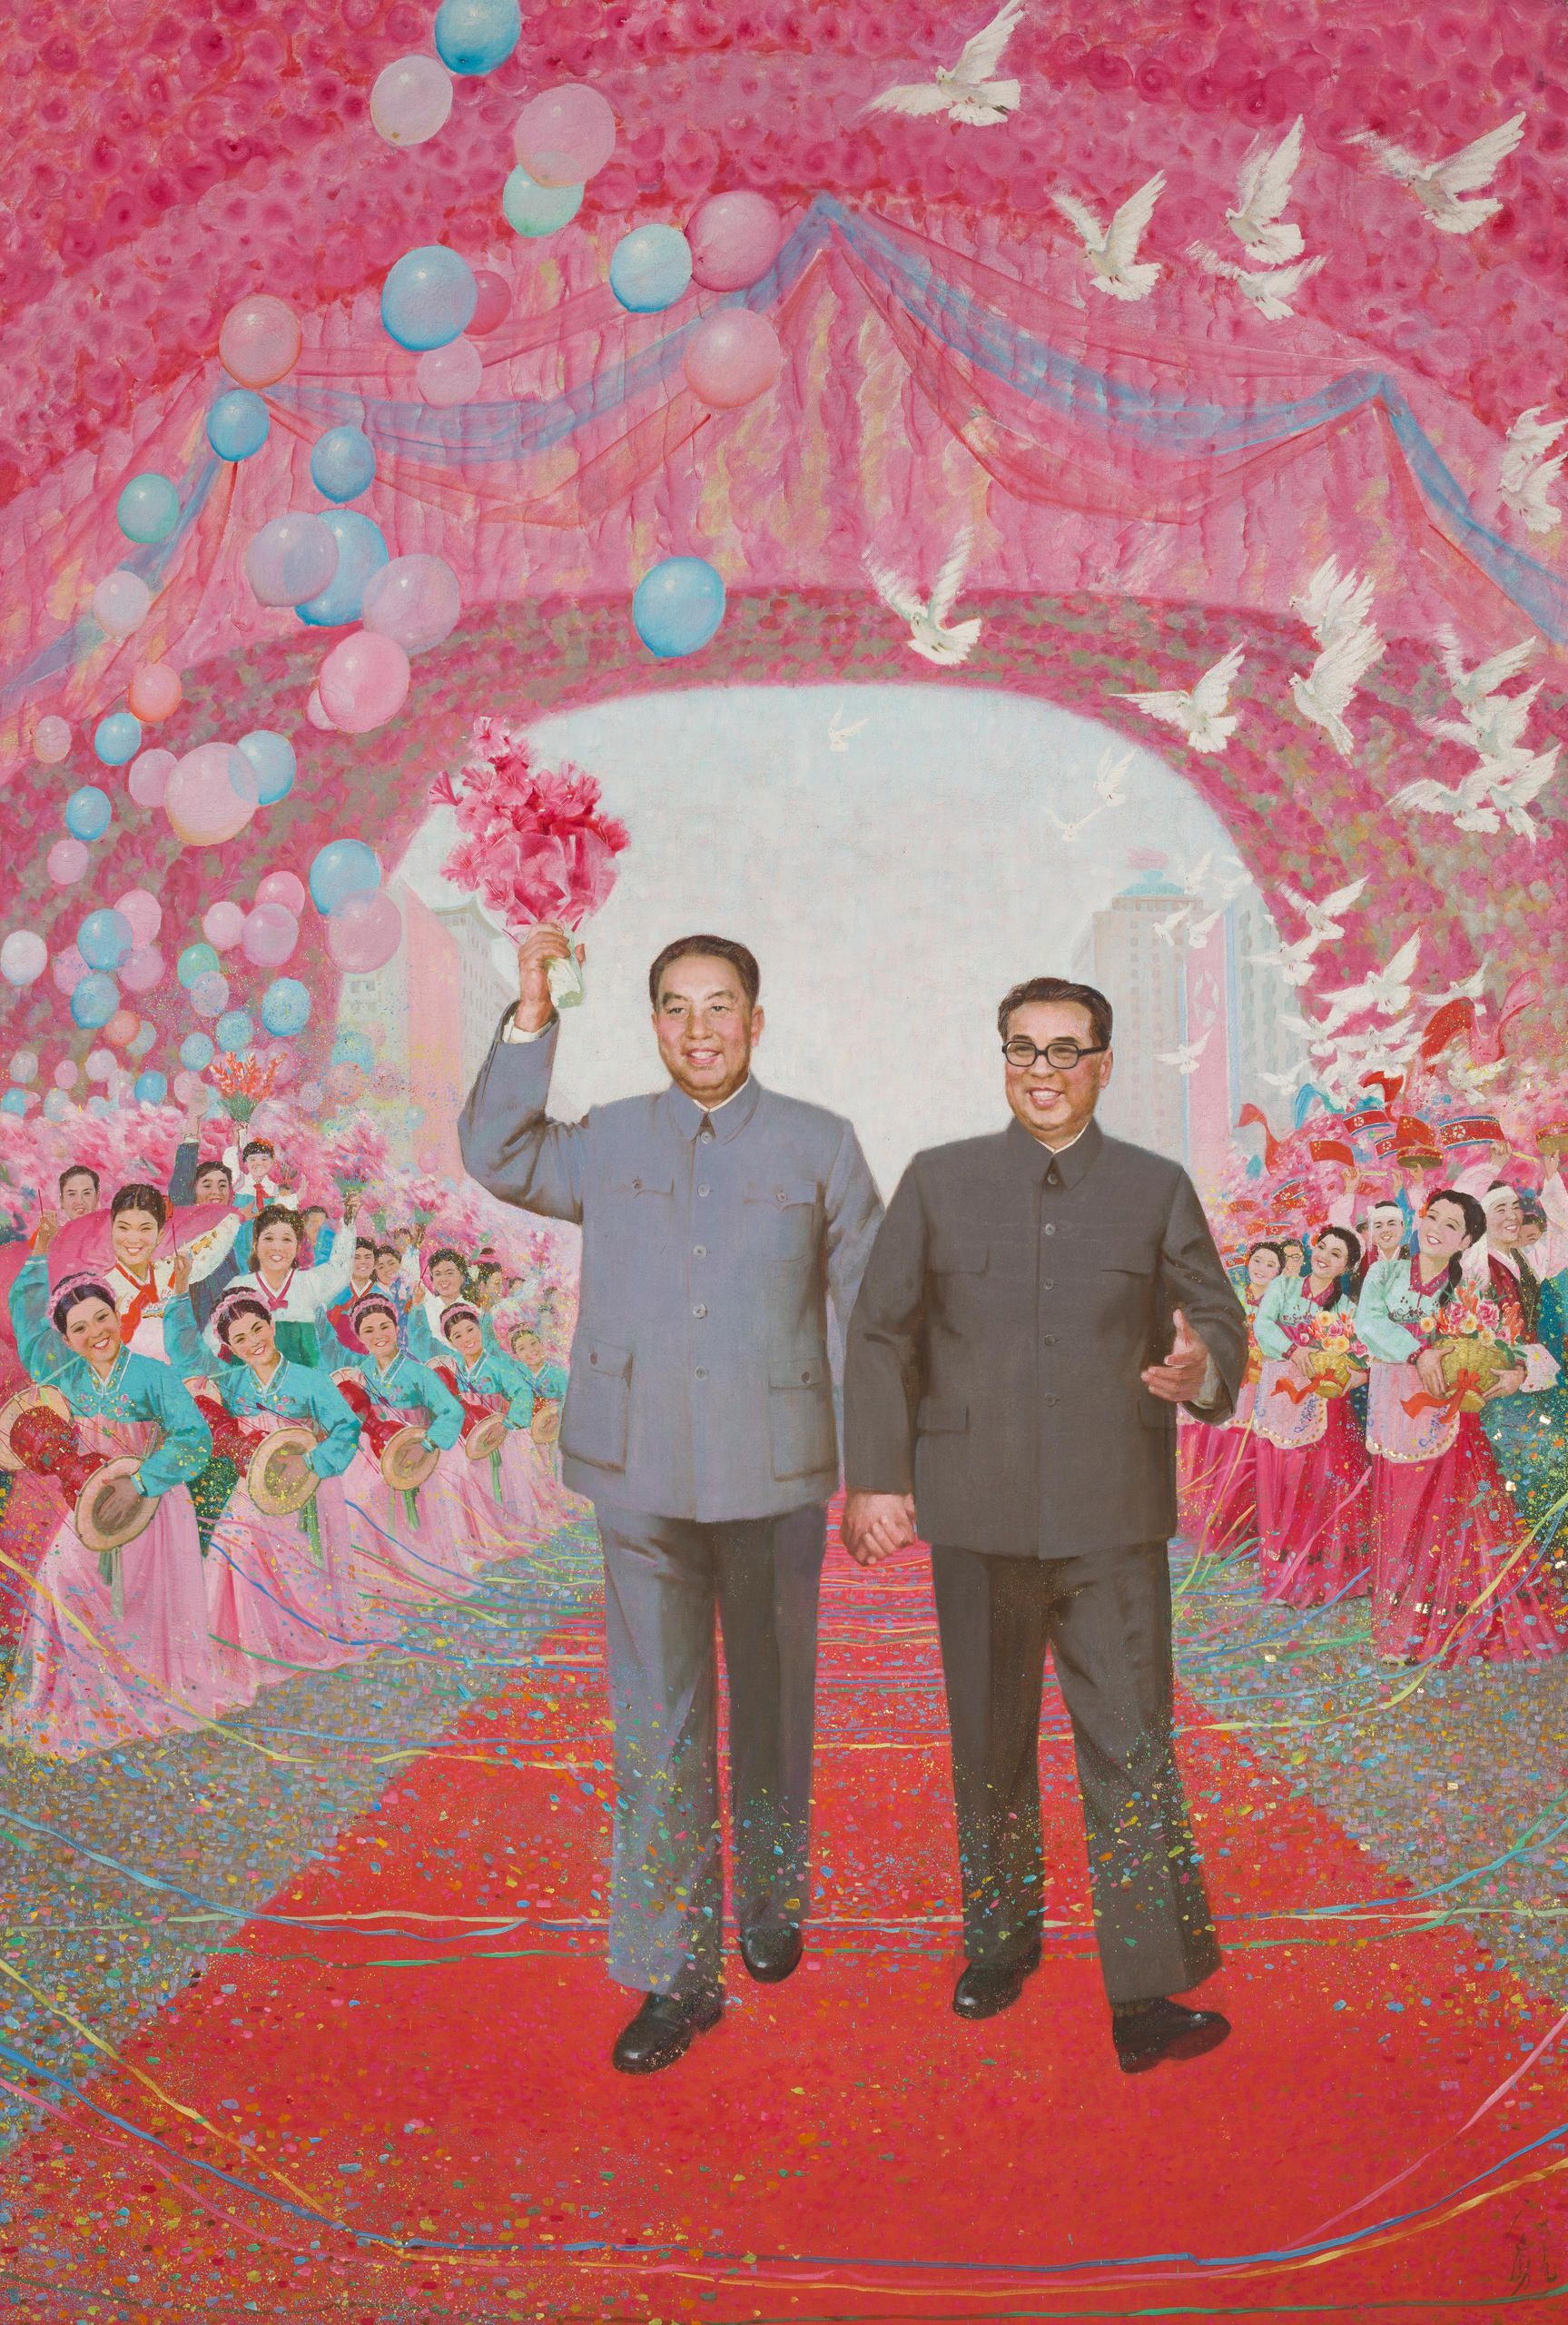 North Korea Socialist Realism